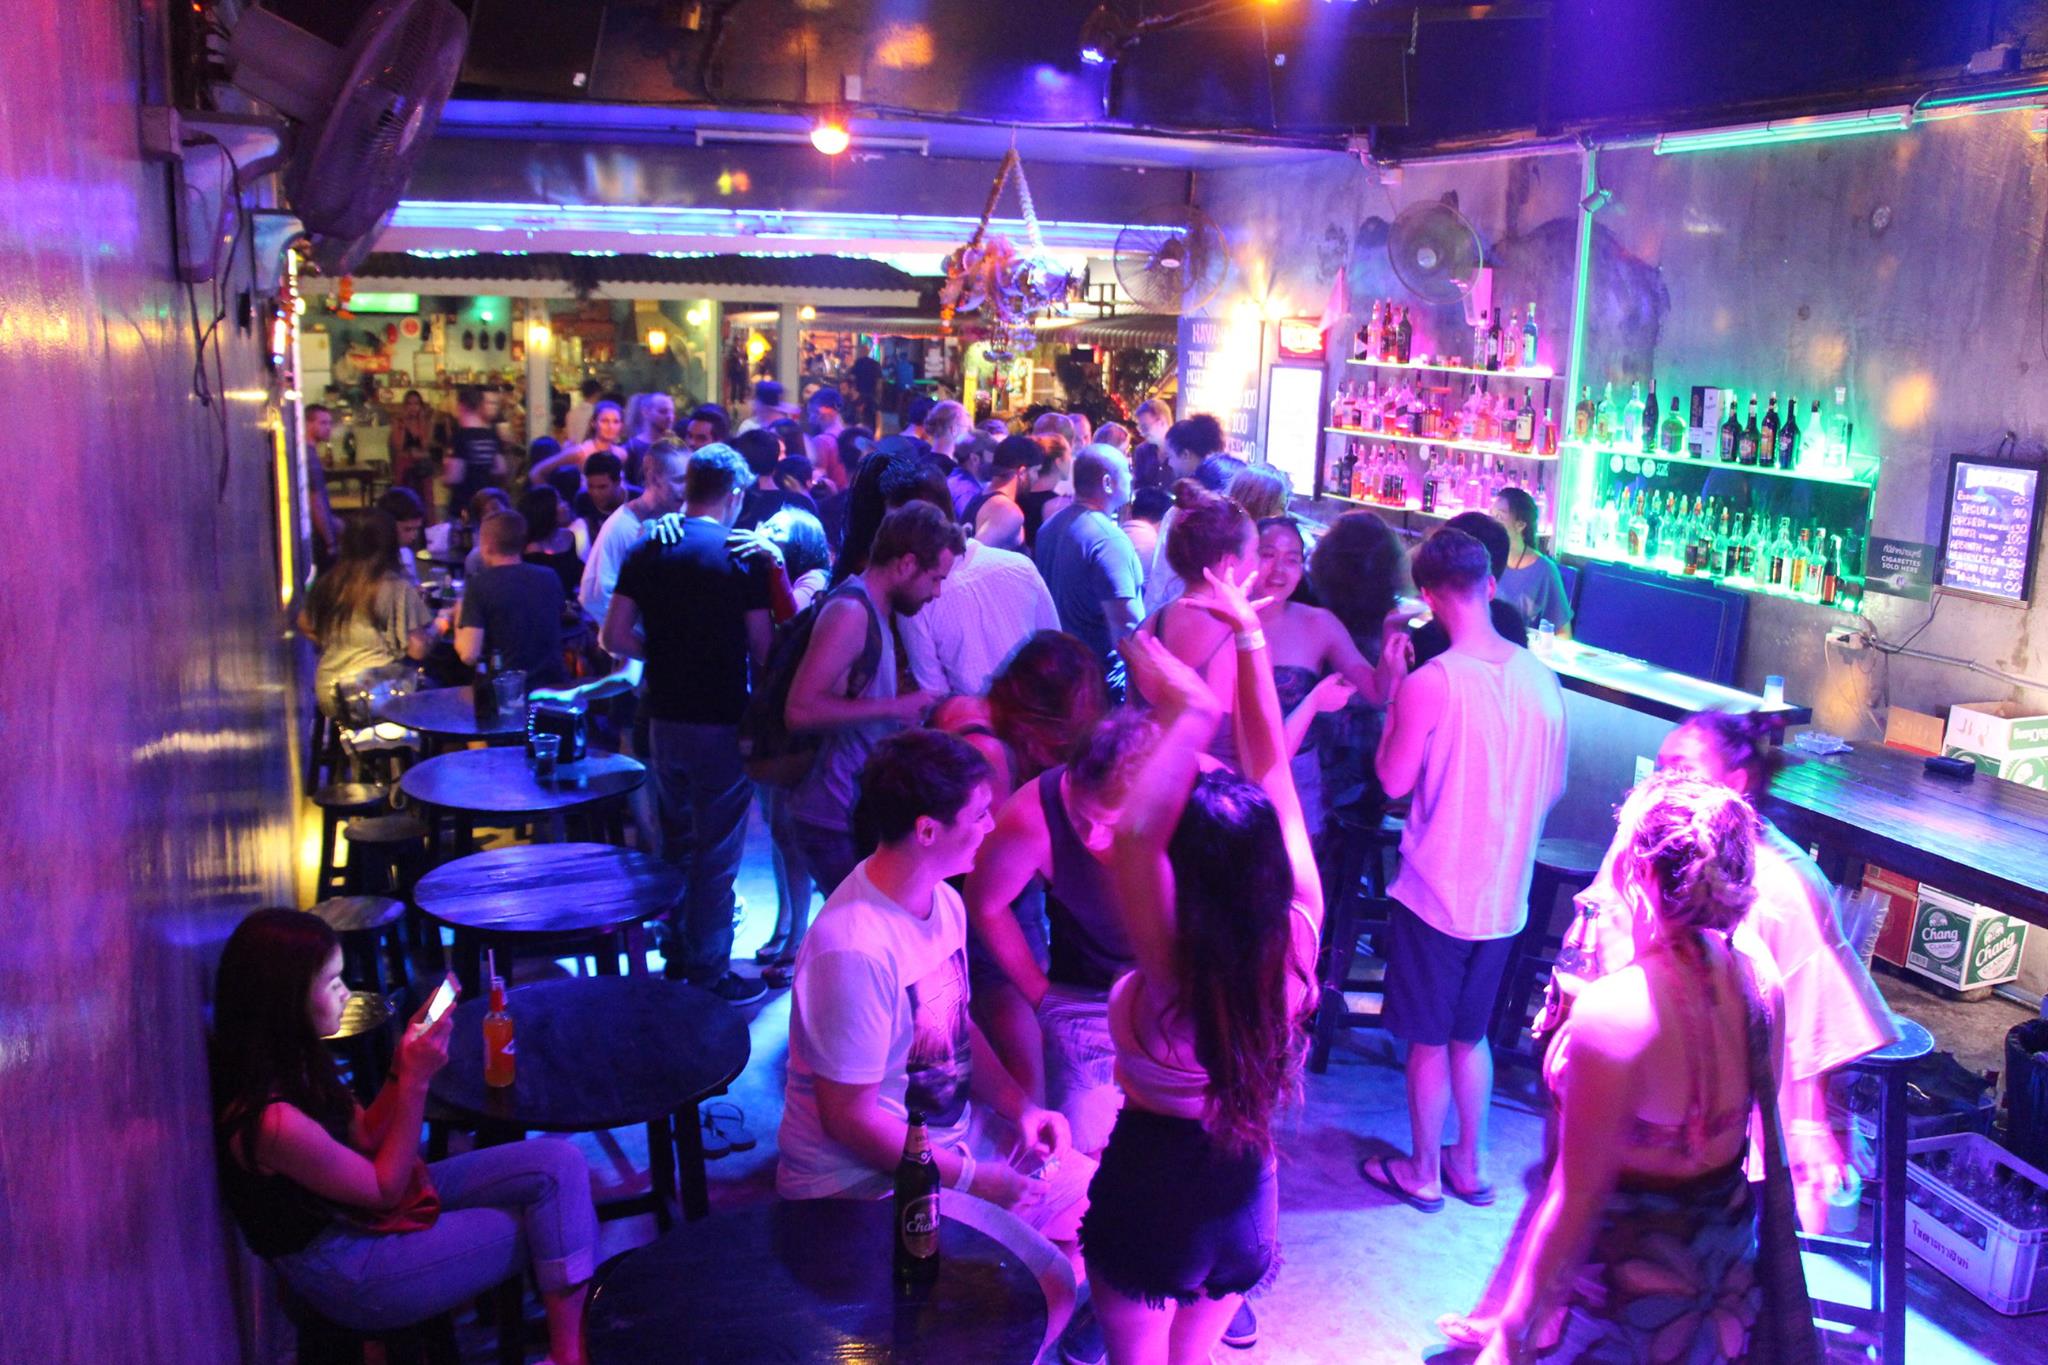 Havana Bar Chiang mai Thailand (ฮาวาน่า บาร์ เชียงใหม่) : Chiang Mai (เชียงใหม่)